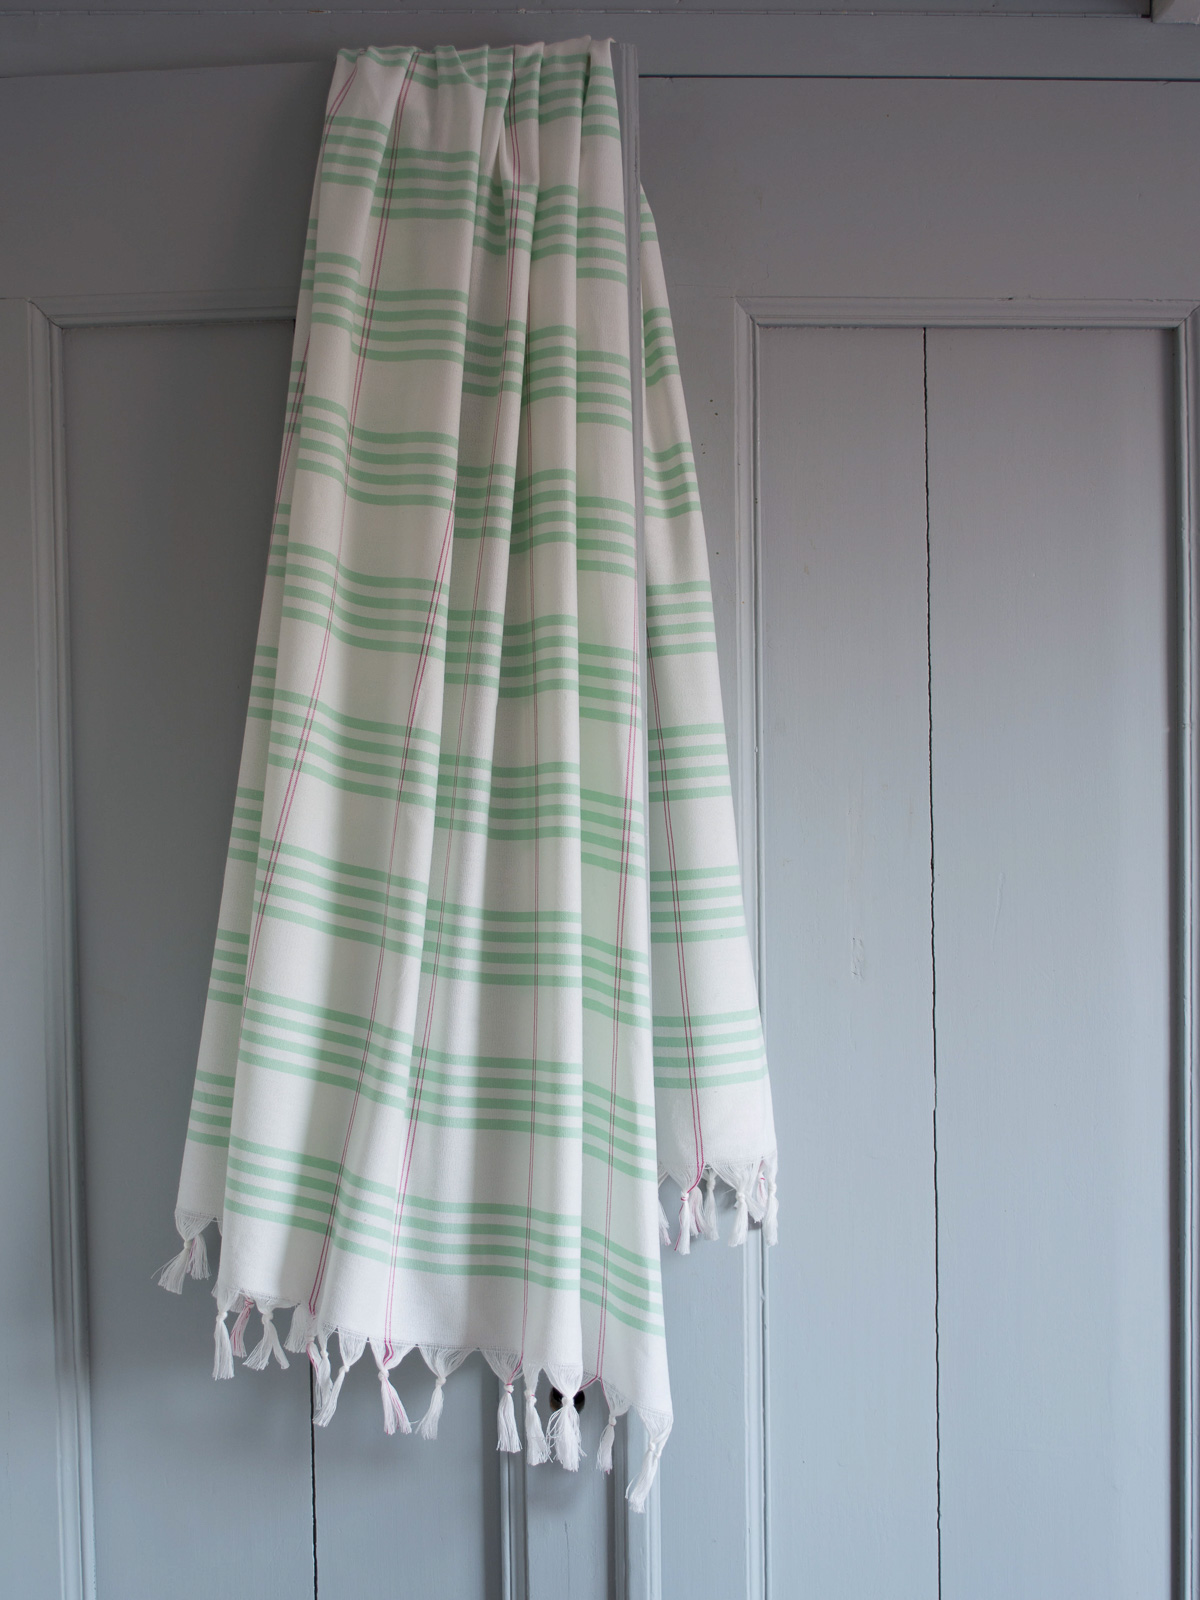 hammam towel checkered fresh green